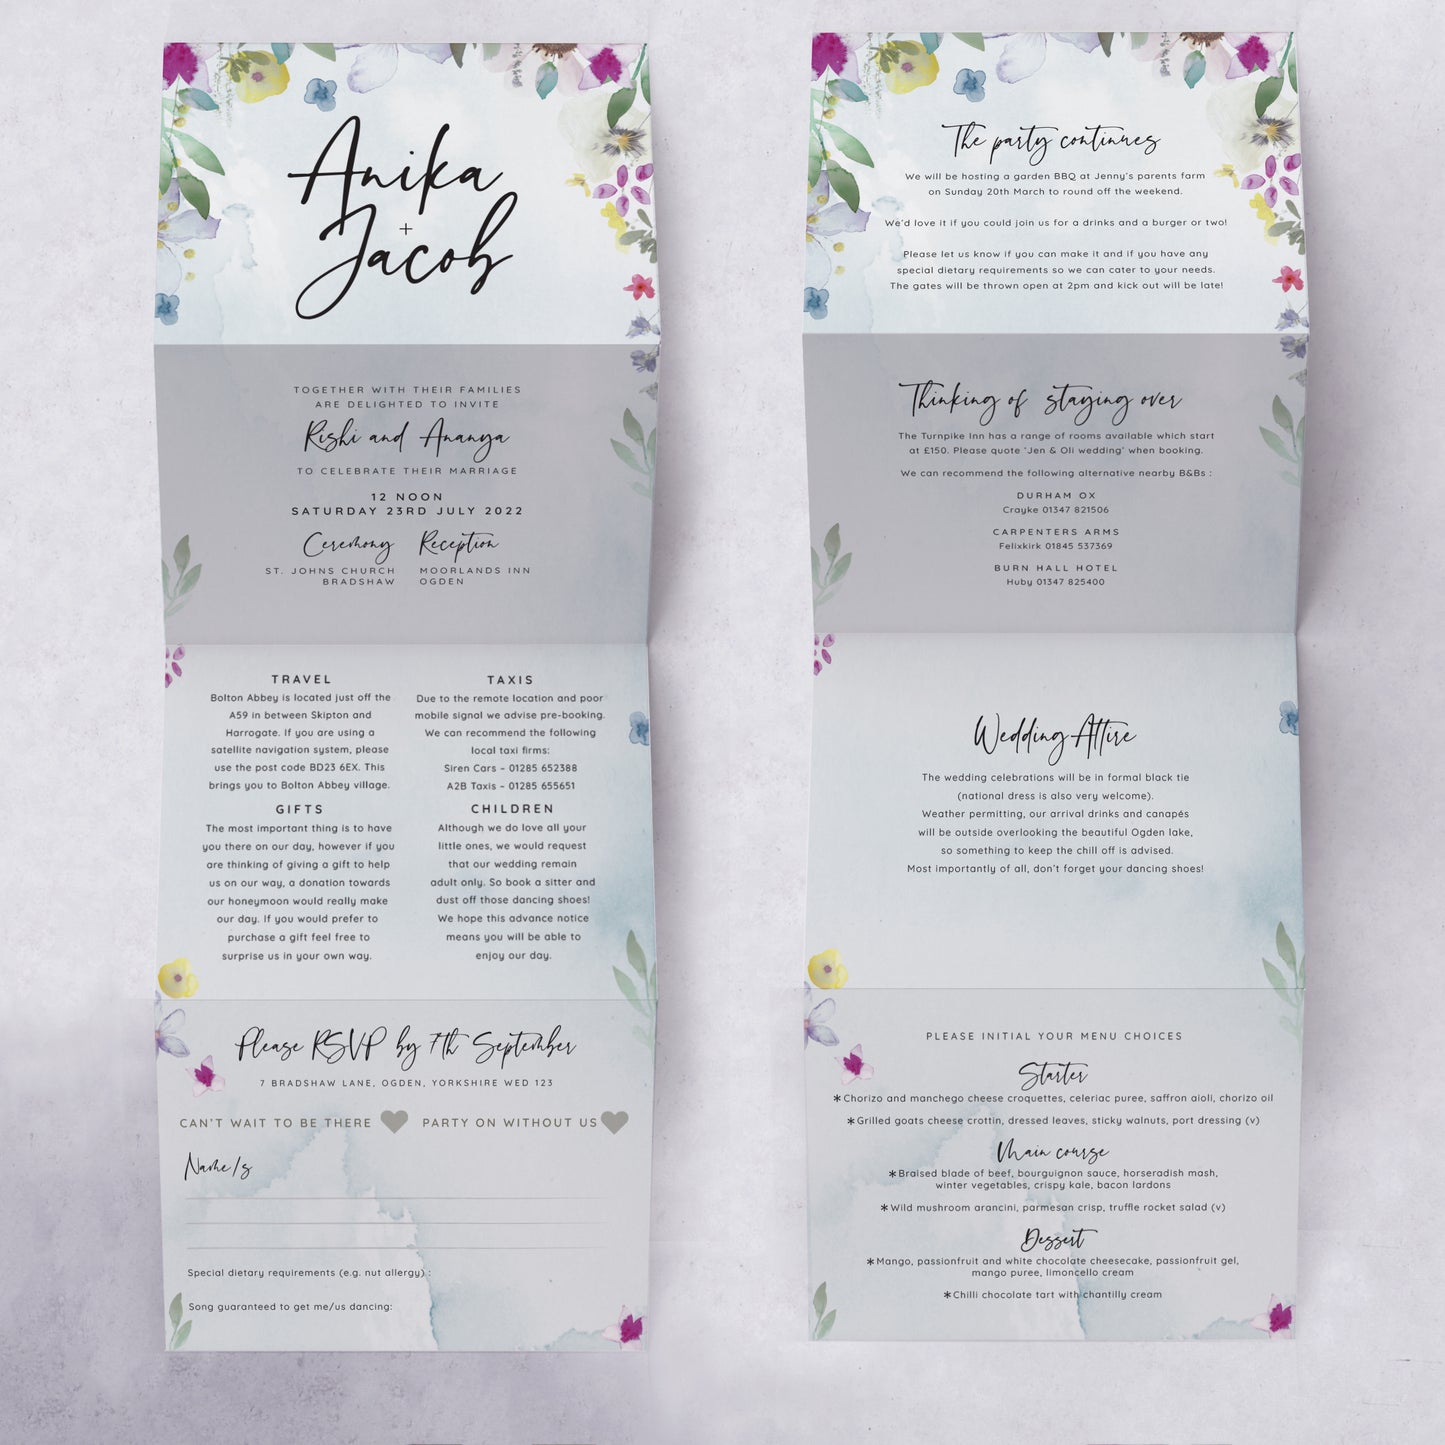 'Flower Press' wedding invite in 4 page concertina fold